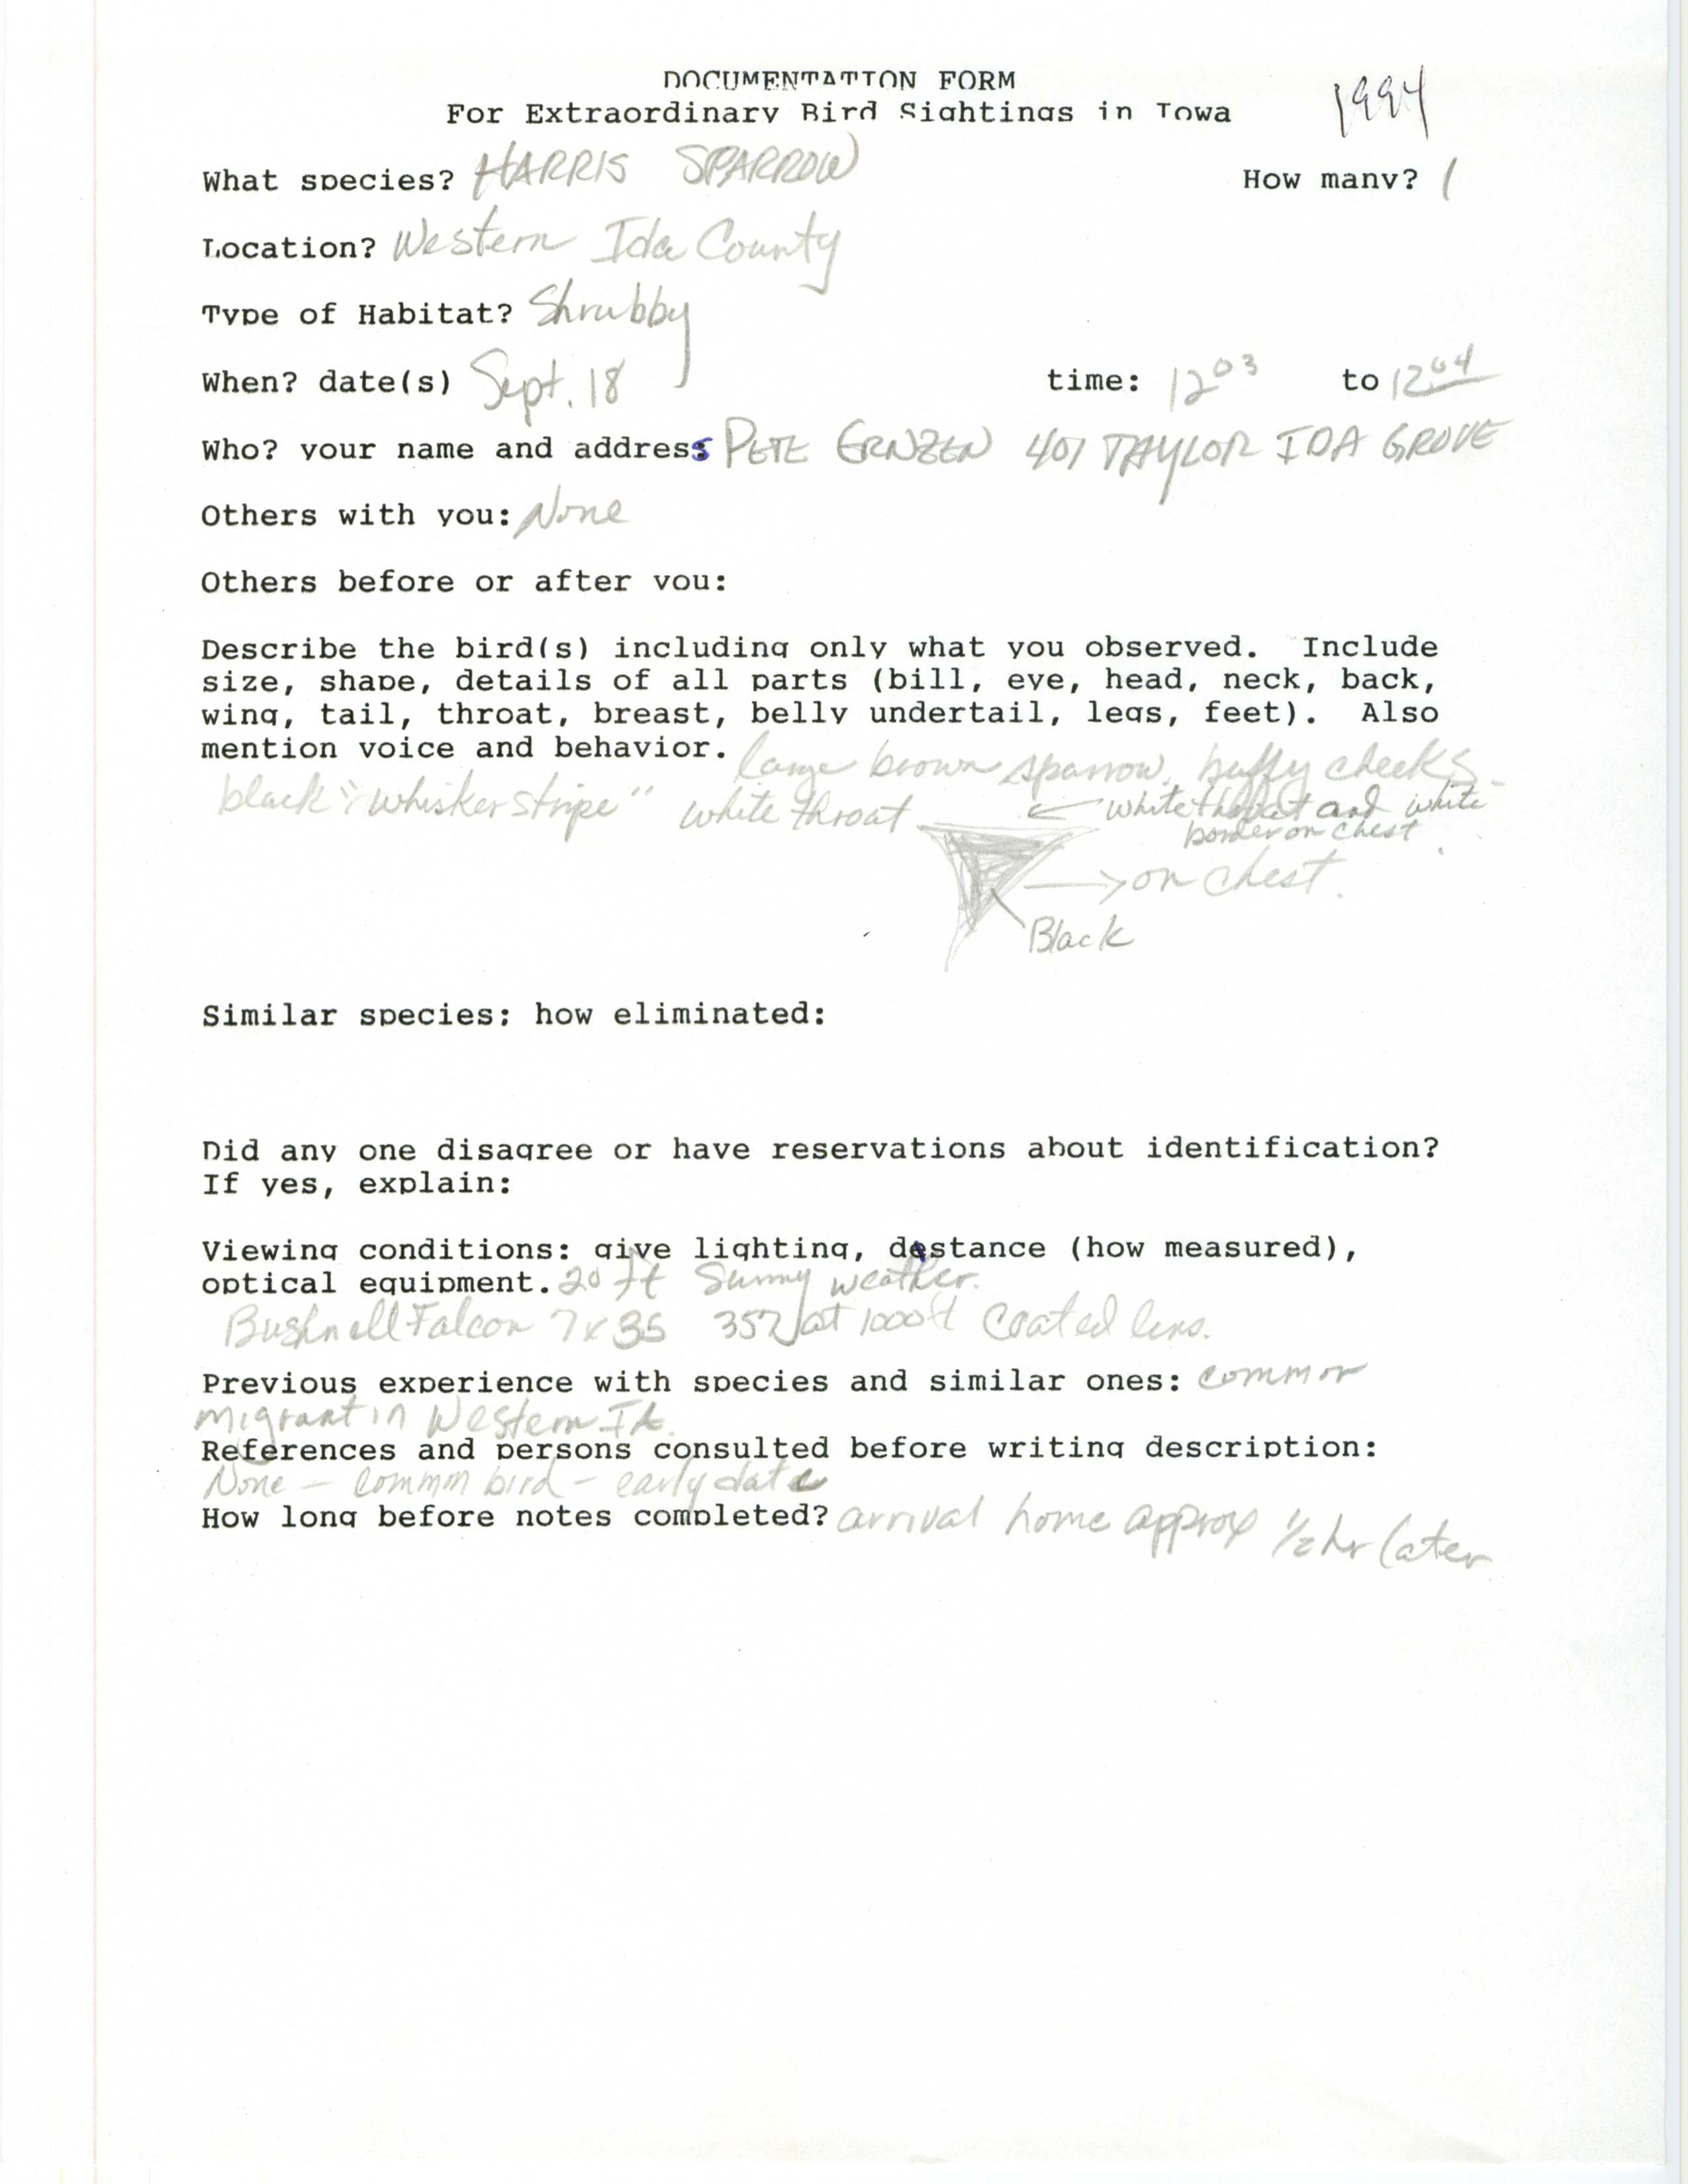 Rare bird documentation form for Harris' Sparrow in western Ida County, 1994